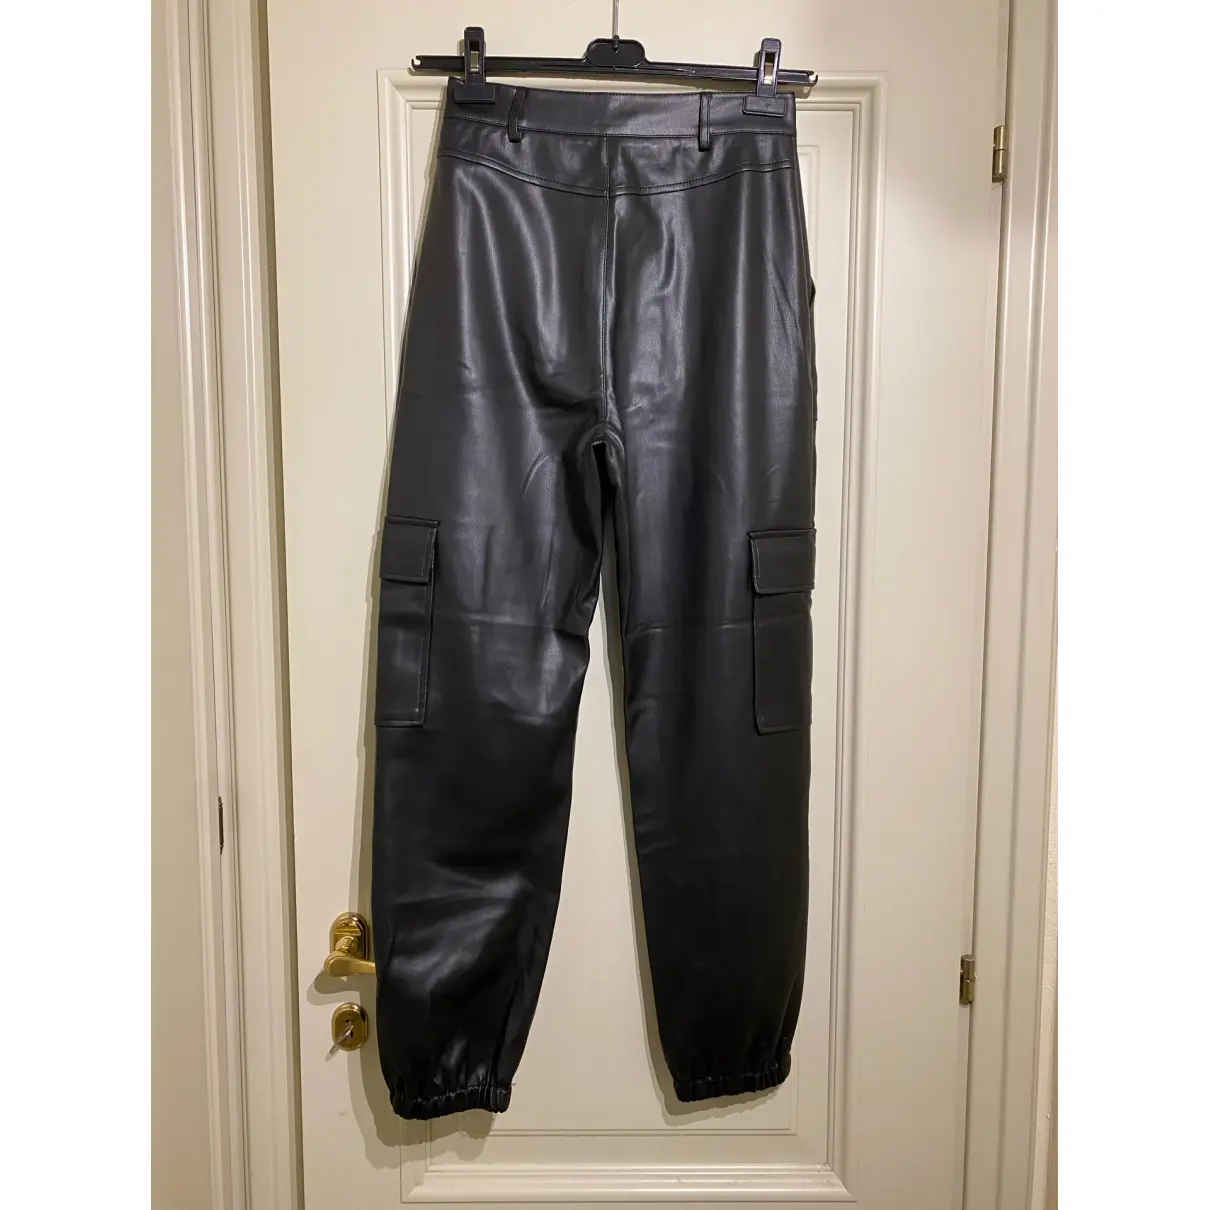 Buy Weili Zheng Vegan leather trousers online